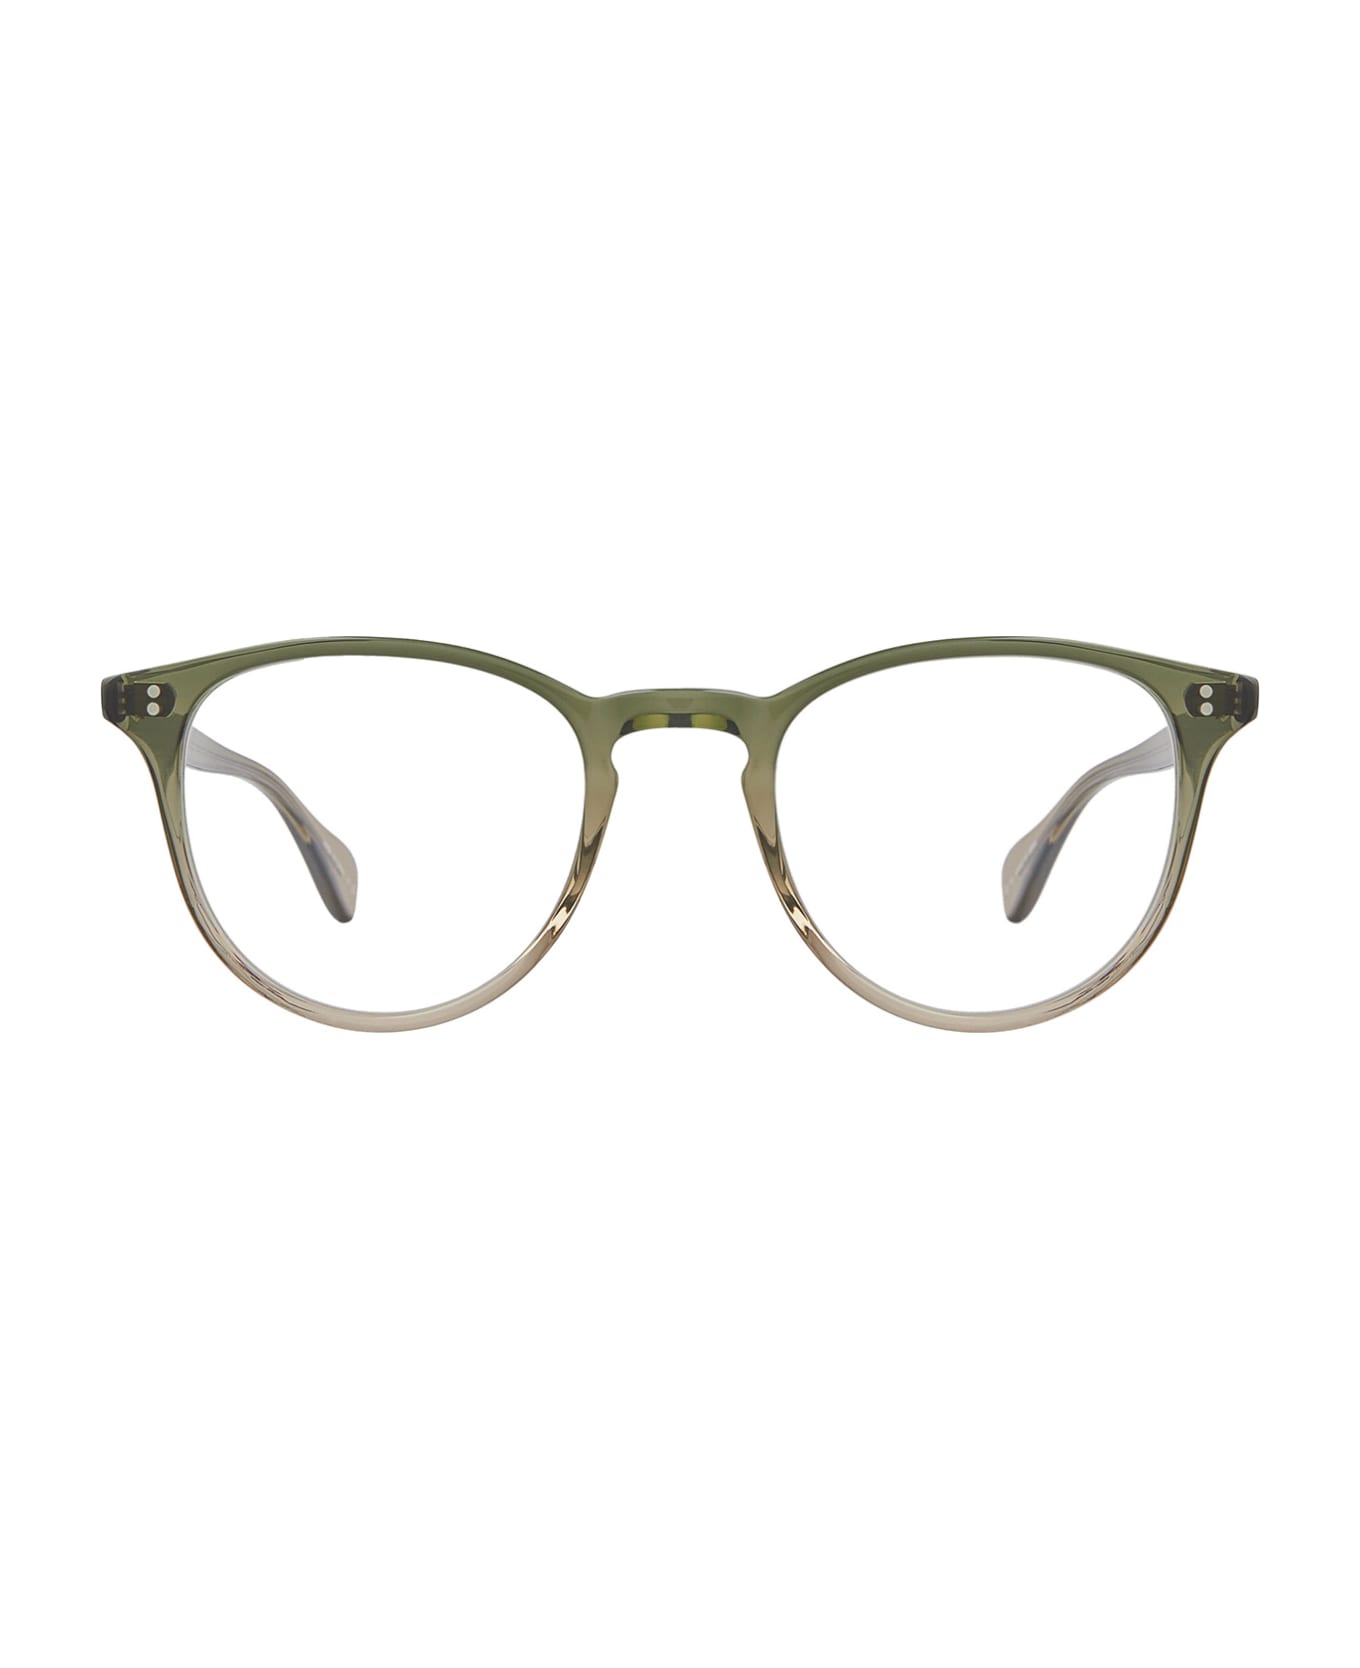 Garrett Leight Manzanita Cyprus Fade Glasses - Cyprus Fade